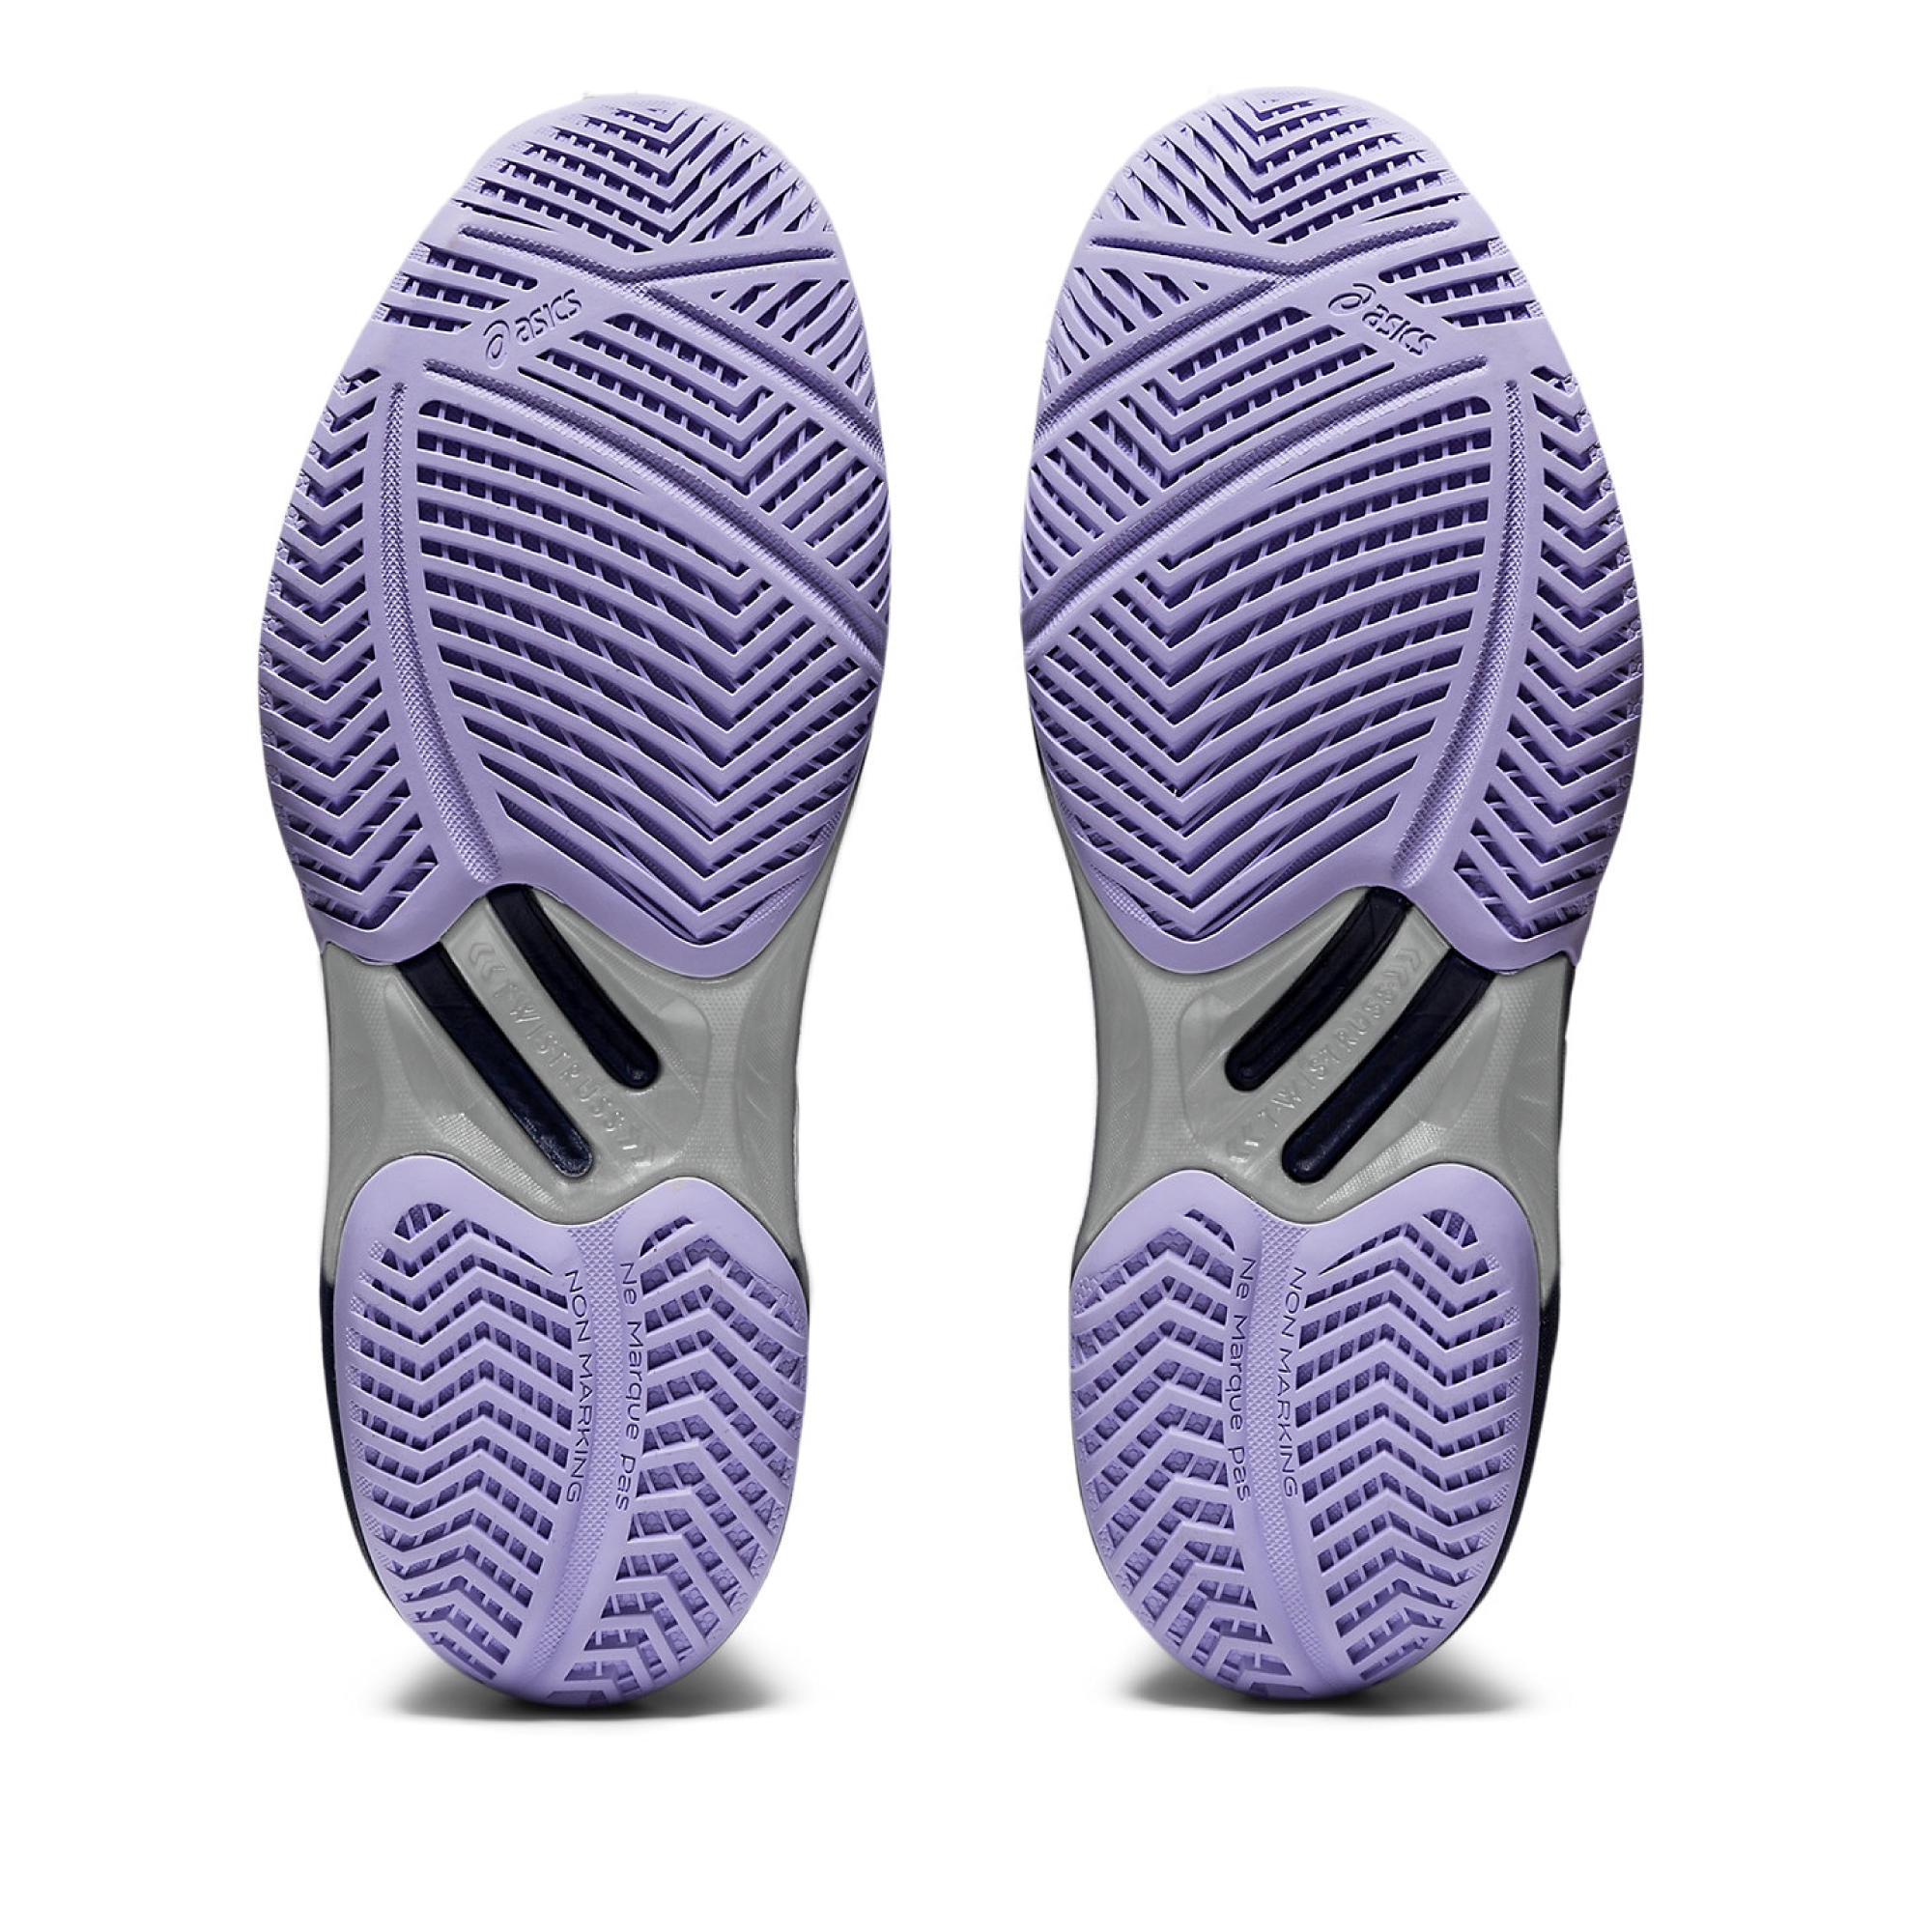 Women's Volleyball Shoes Sky Elite - Purple/Blue 5/8